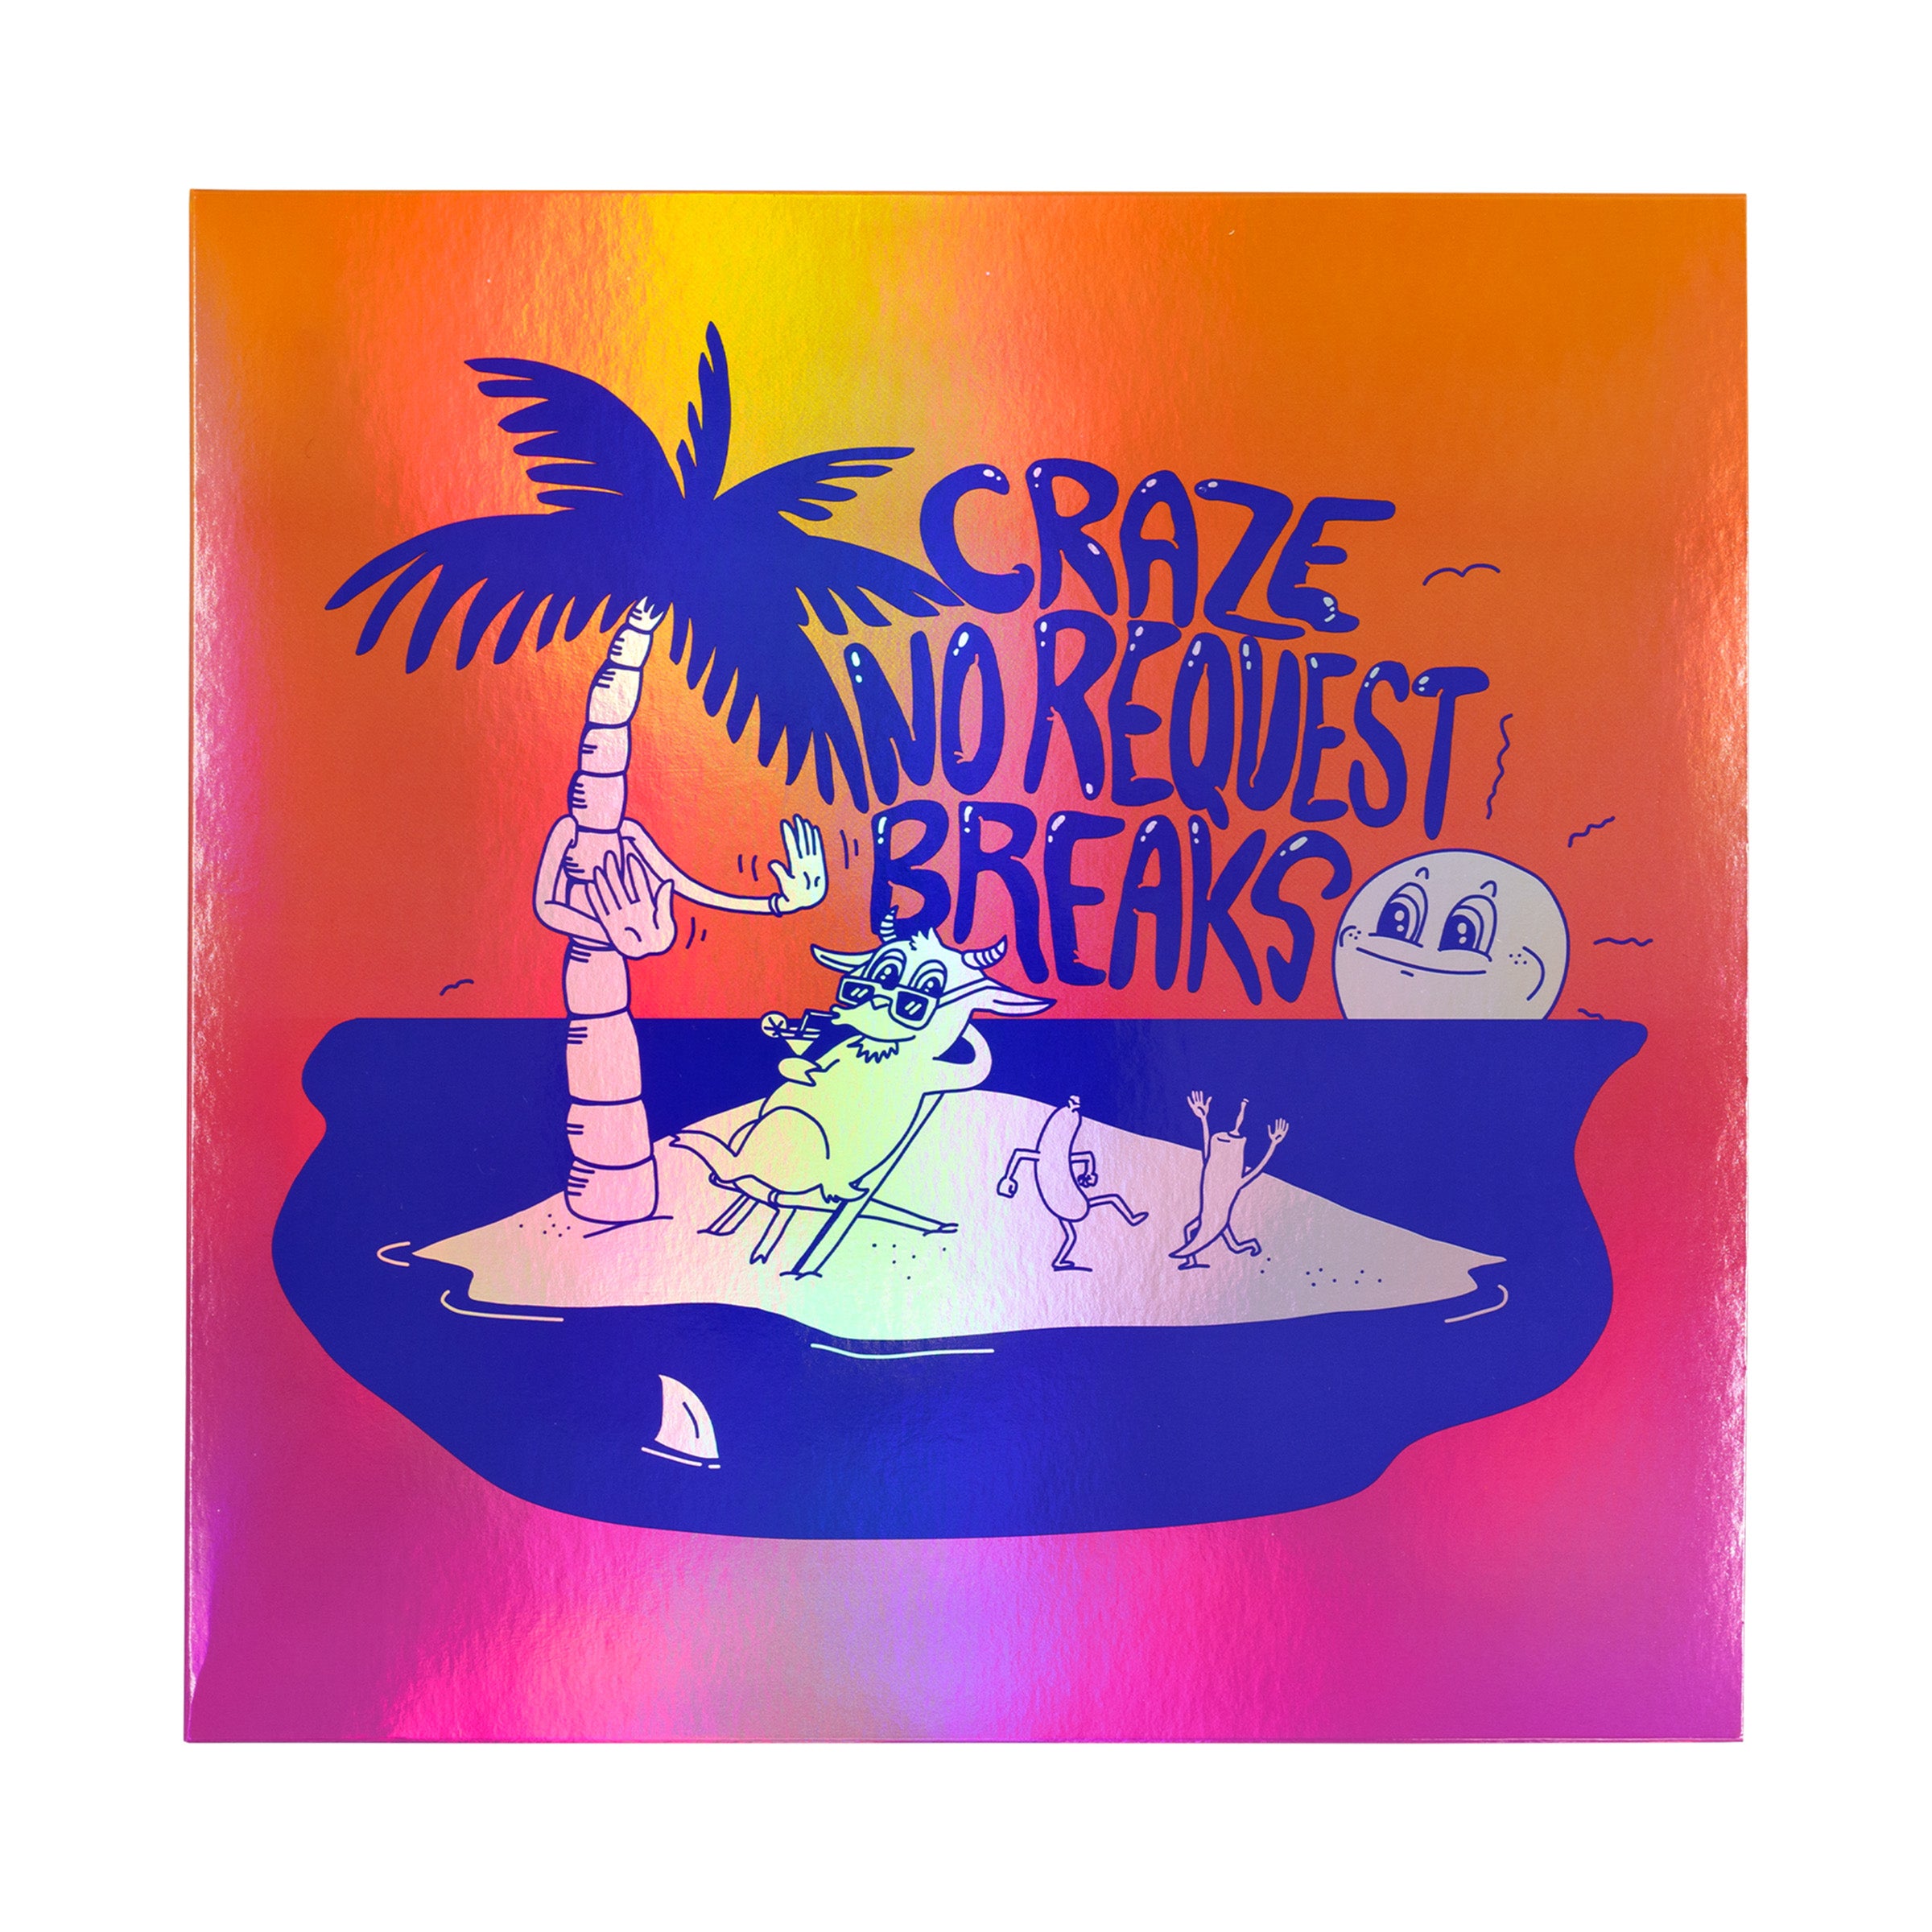 Serato 12” Craze No Request Breaks Control Vinyl (Pair)